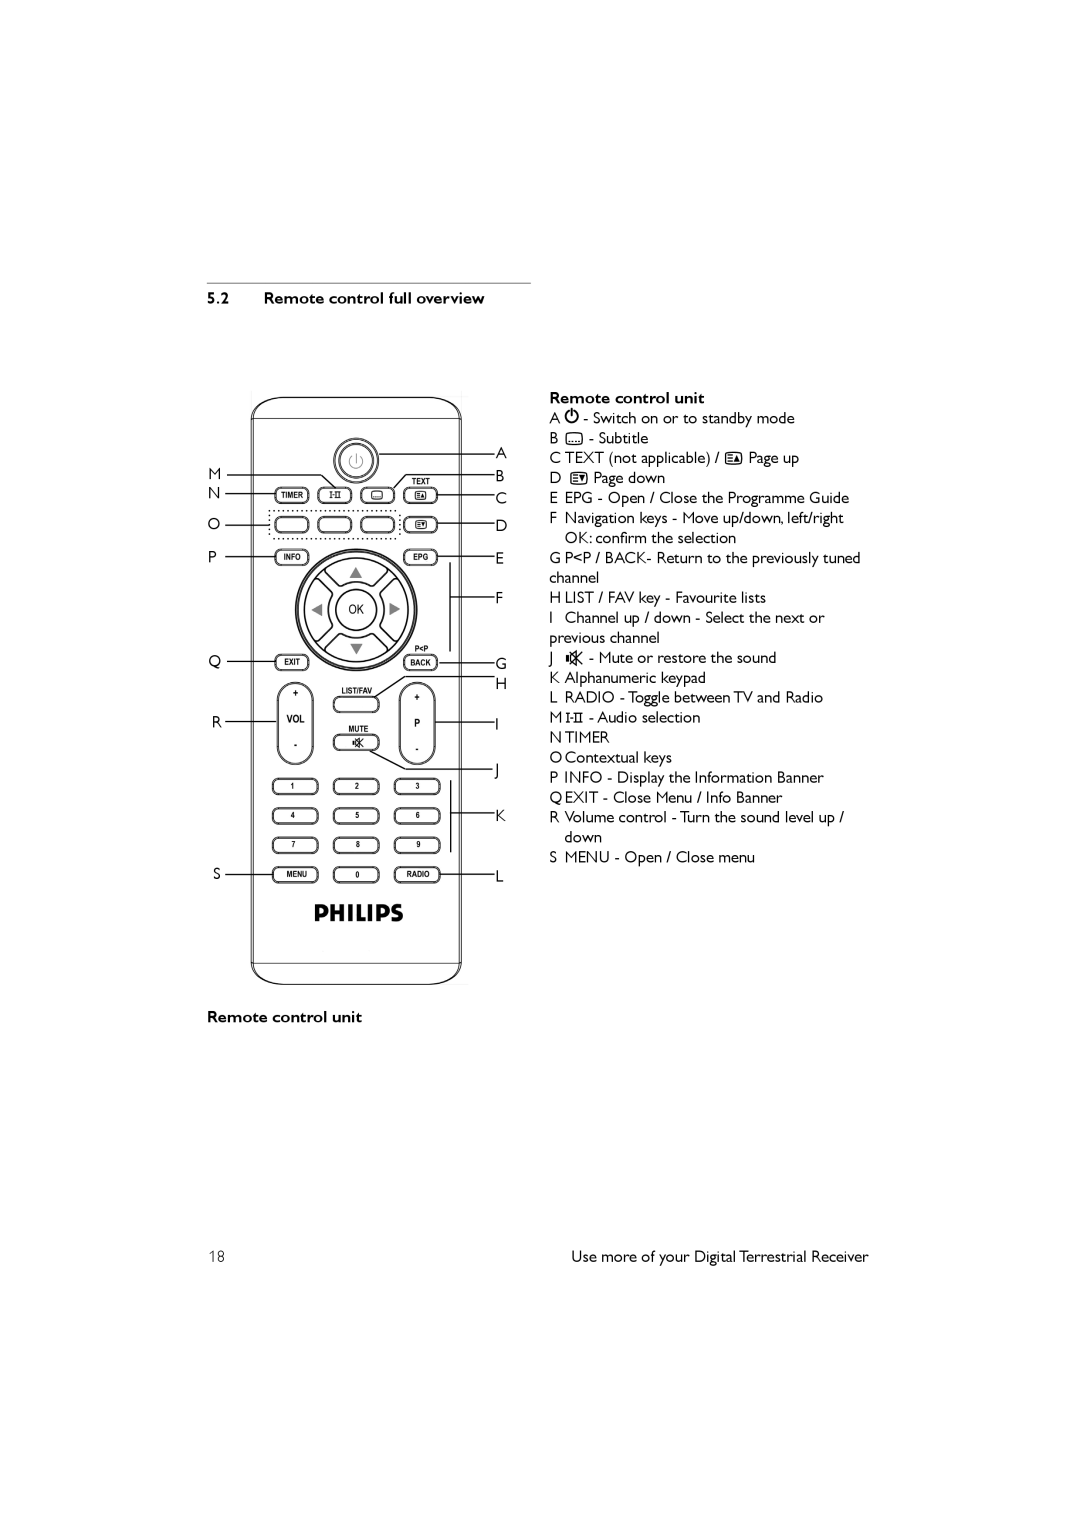 Philips DTR 2530/05 manual Remote control full overview, Remote control unit, E EPG - Open / Close the Programme Guide 